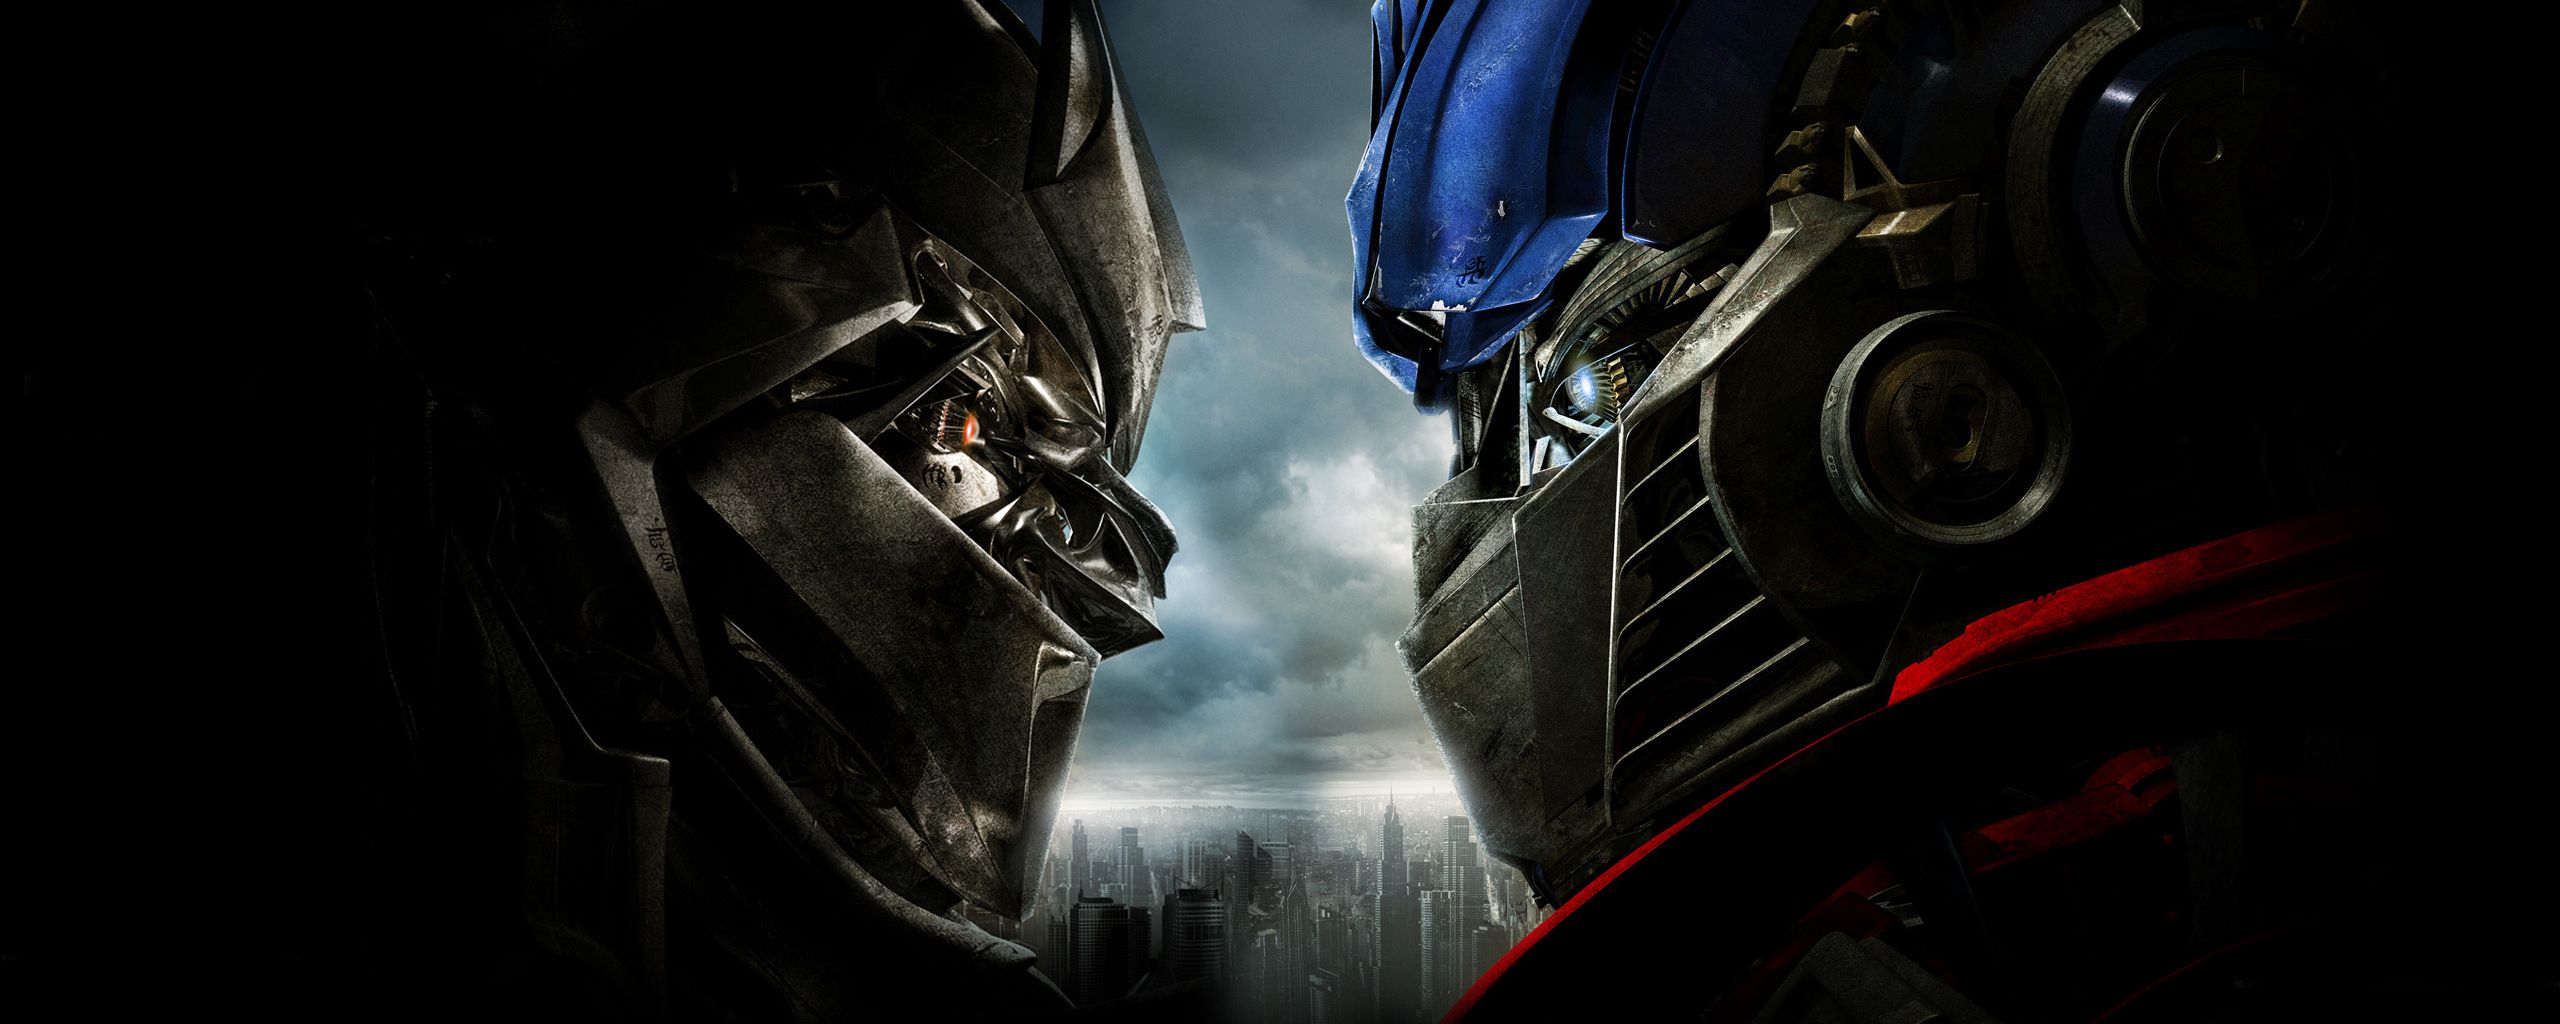 Optimus Prime Megatron Transformers 2 - Revenge of the Fallen ...